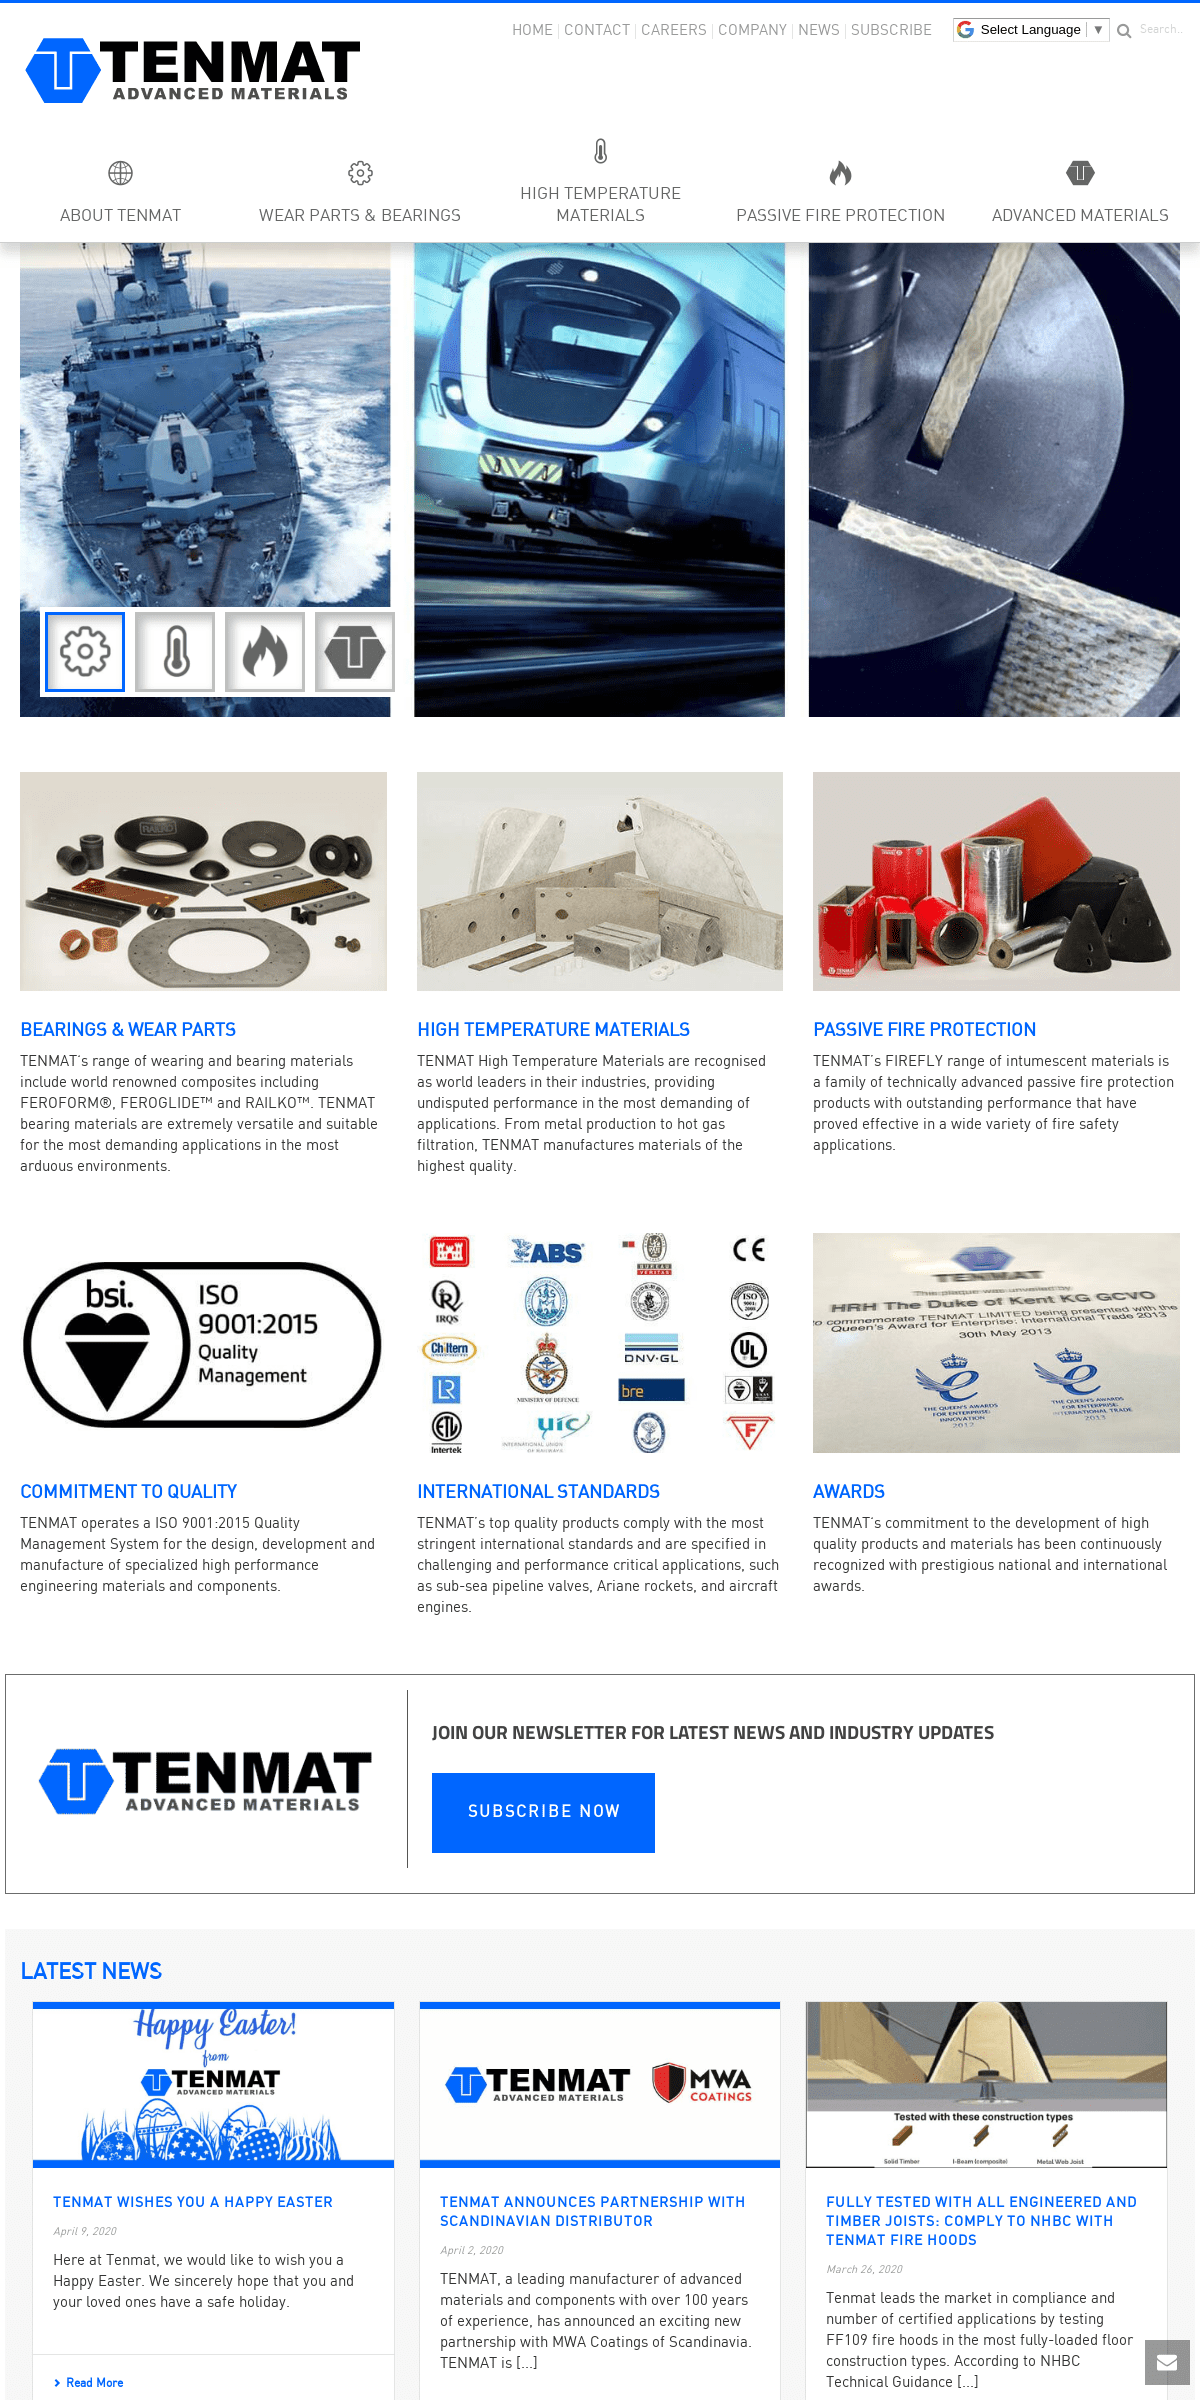 A complete backup of tenmat.com